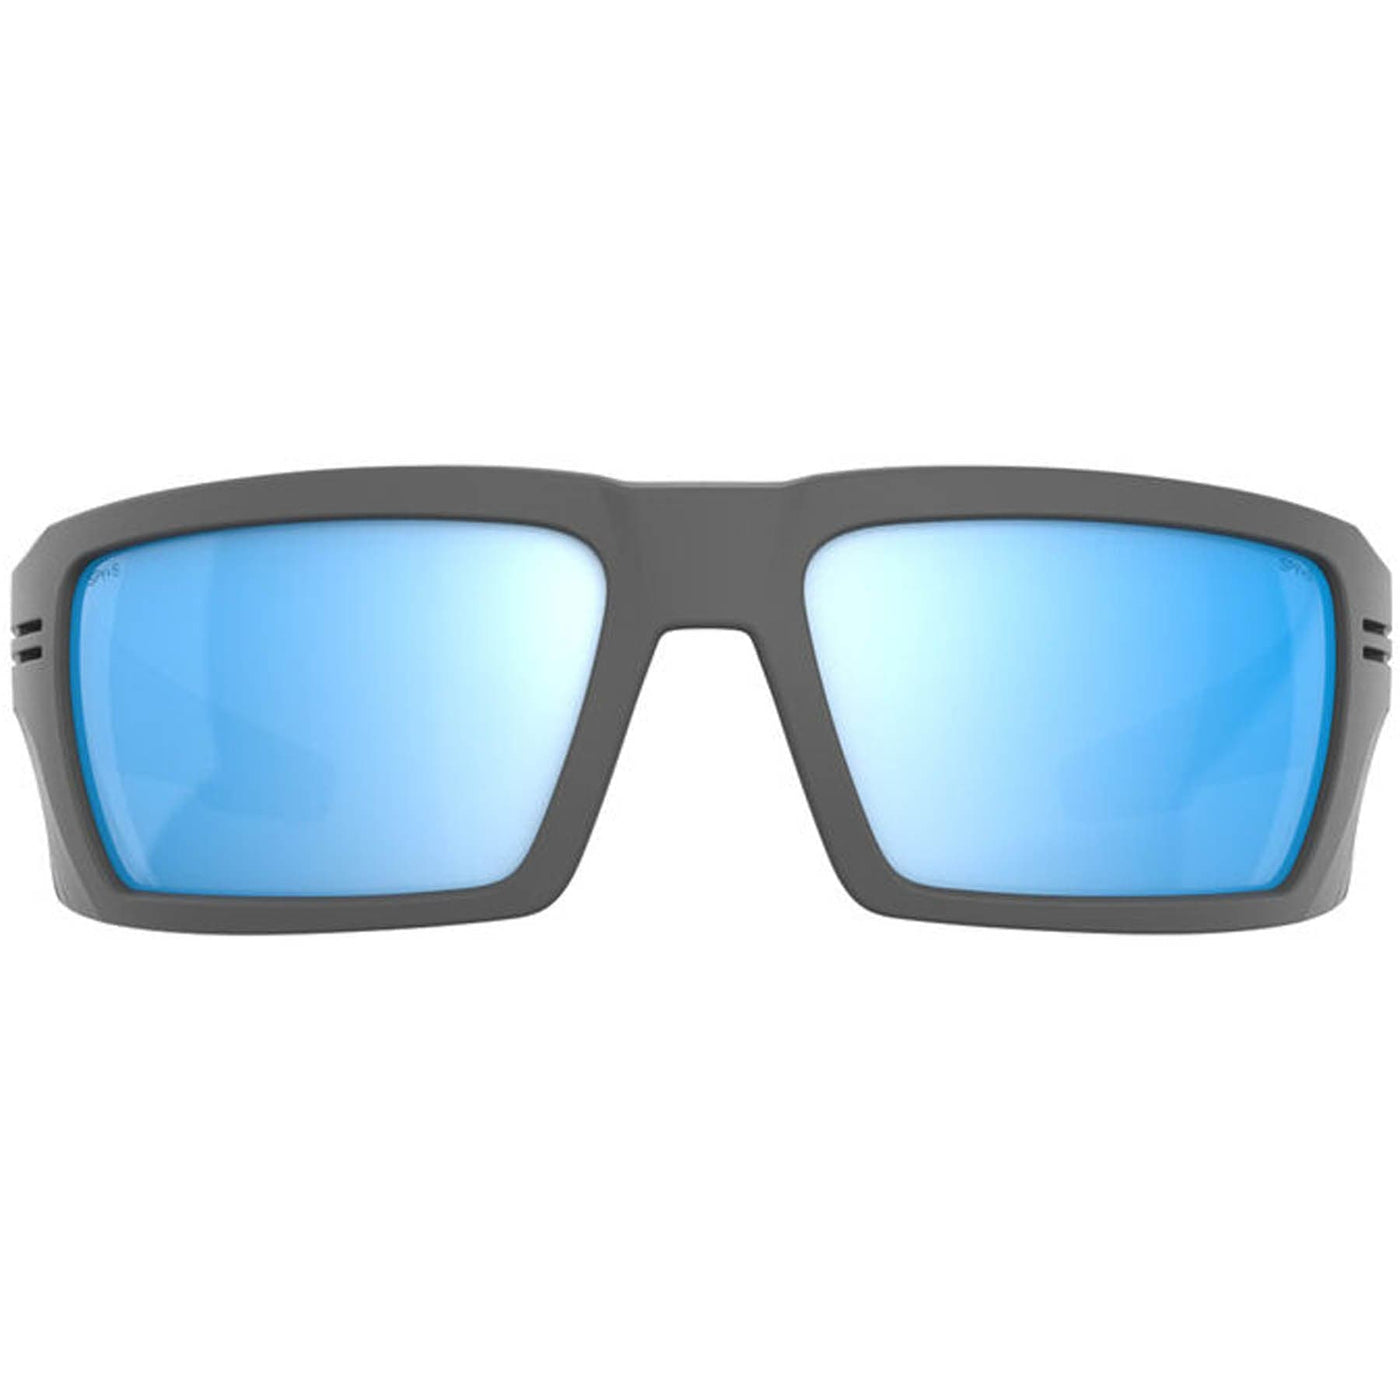 SPY REBAR SE ANSI Polarized Sunglasses, Happy BOOST - Blue 8Lines Shop - Fast Shipping